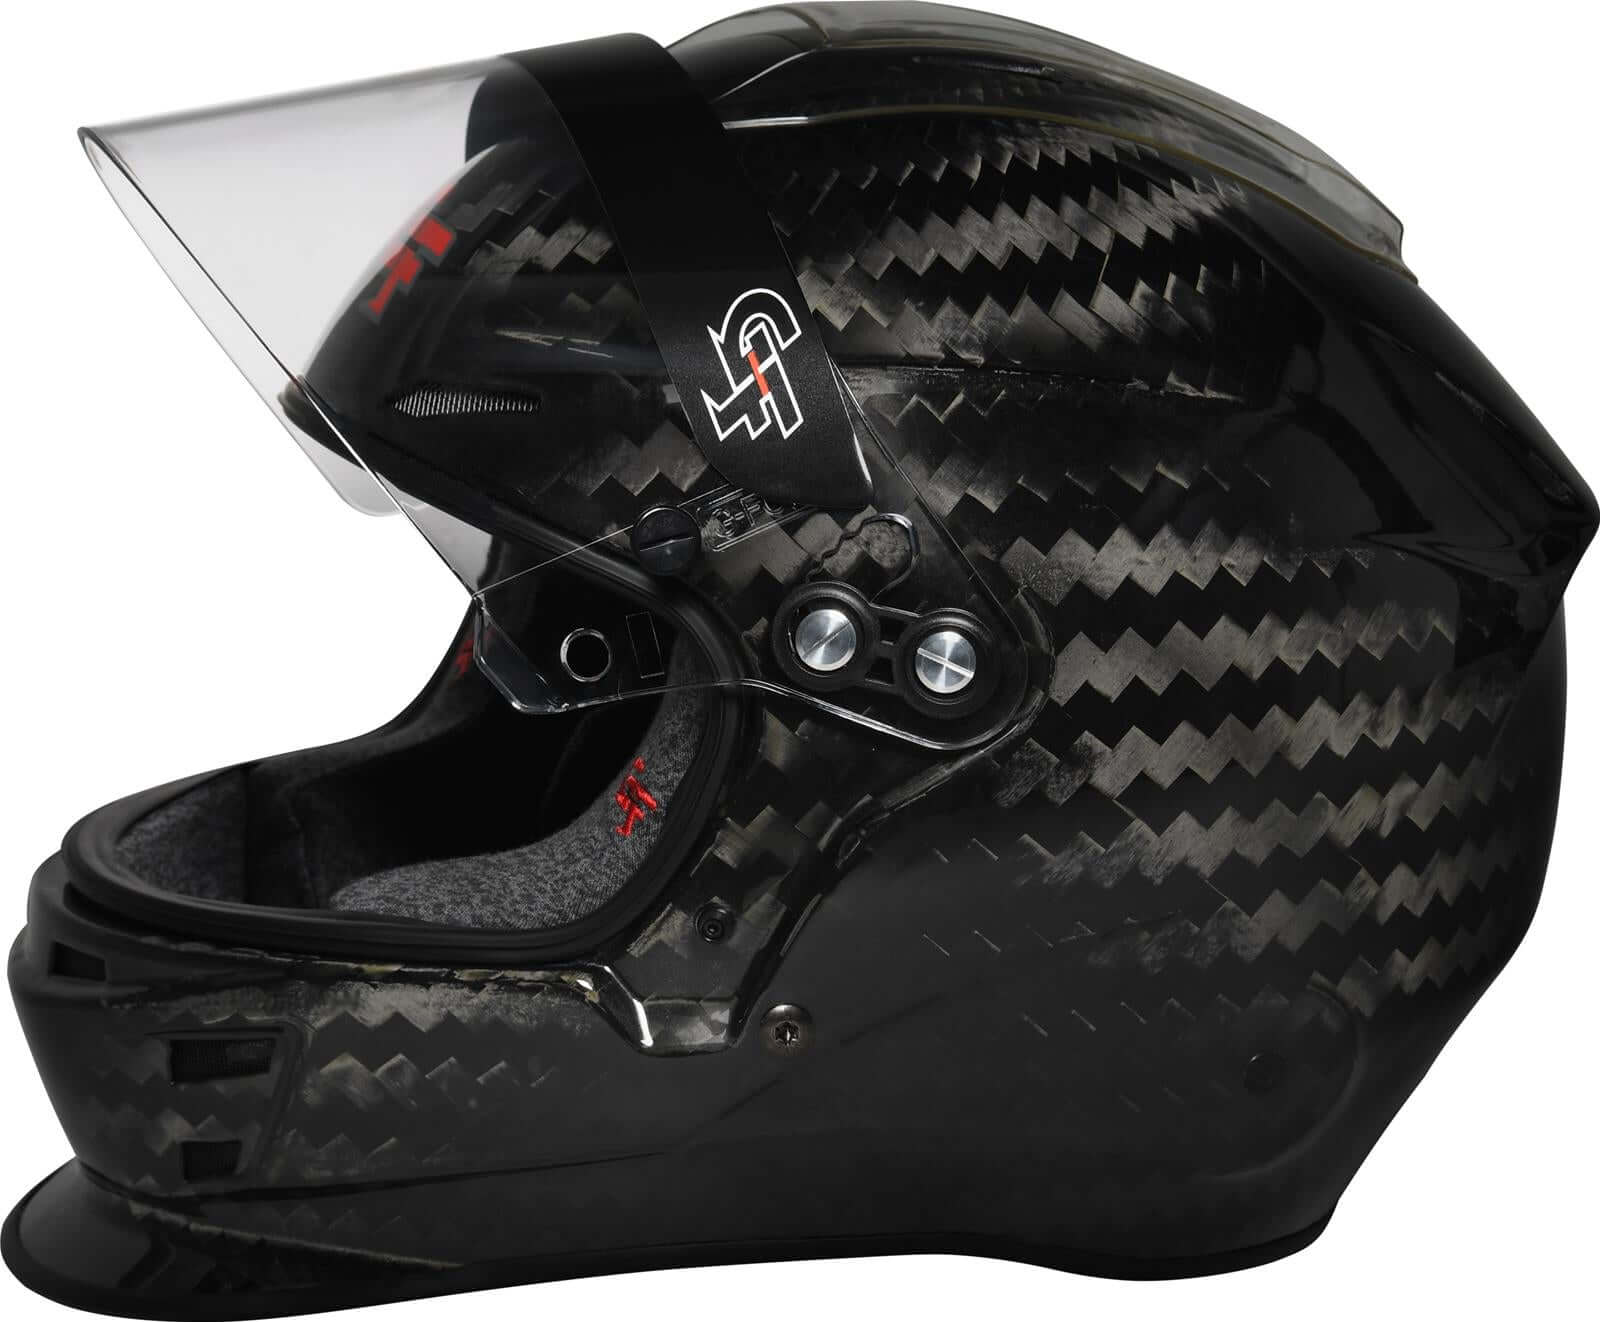 SuperNova Carbon Fiber Helmet - $1199.00